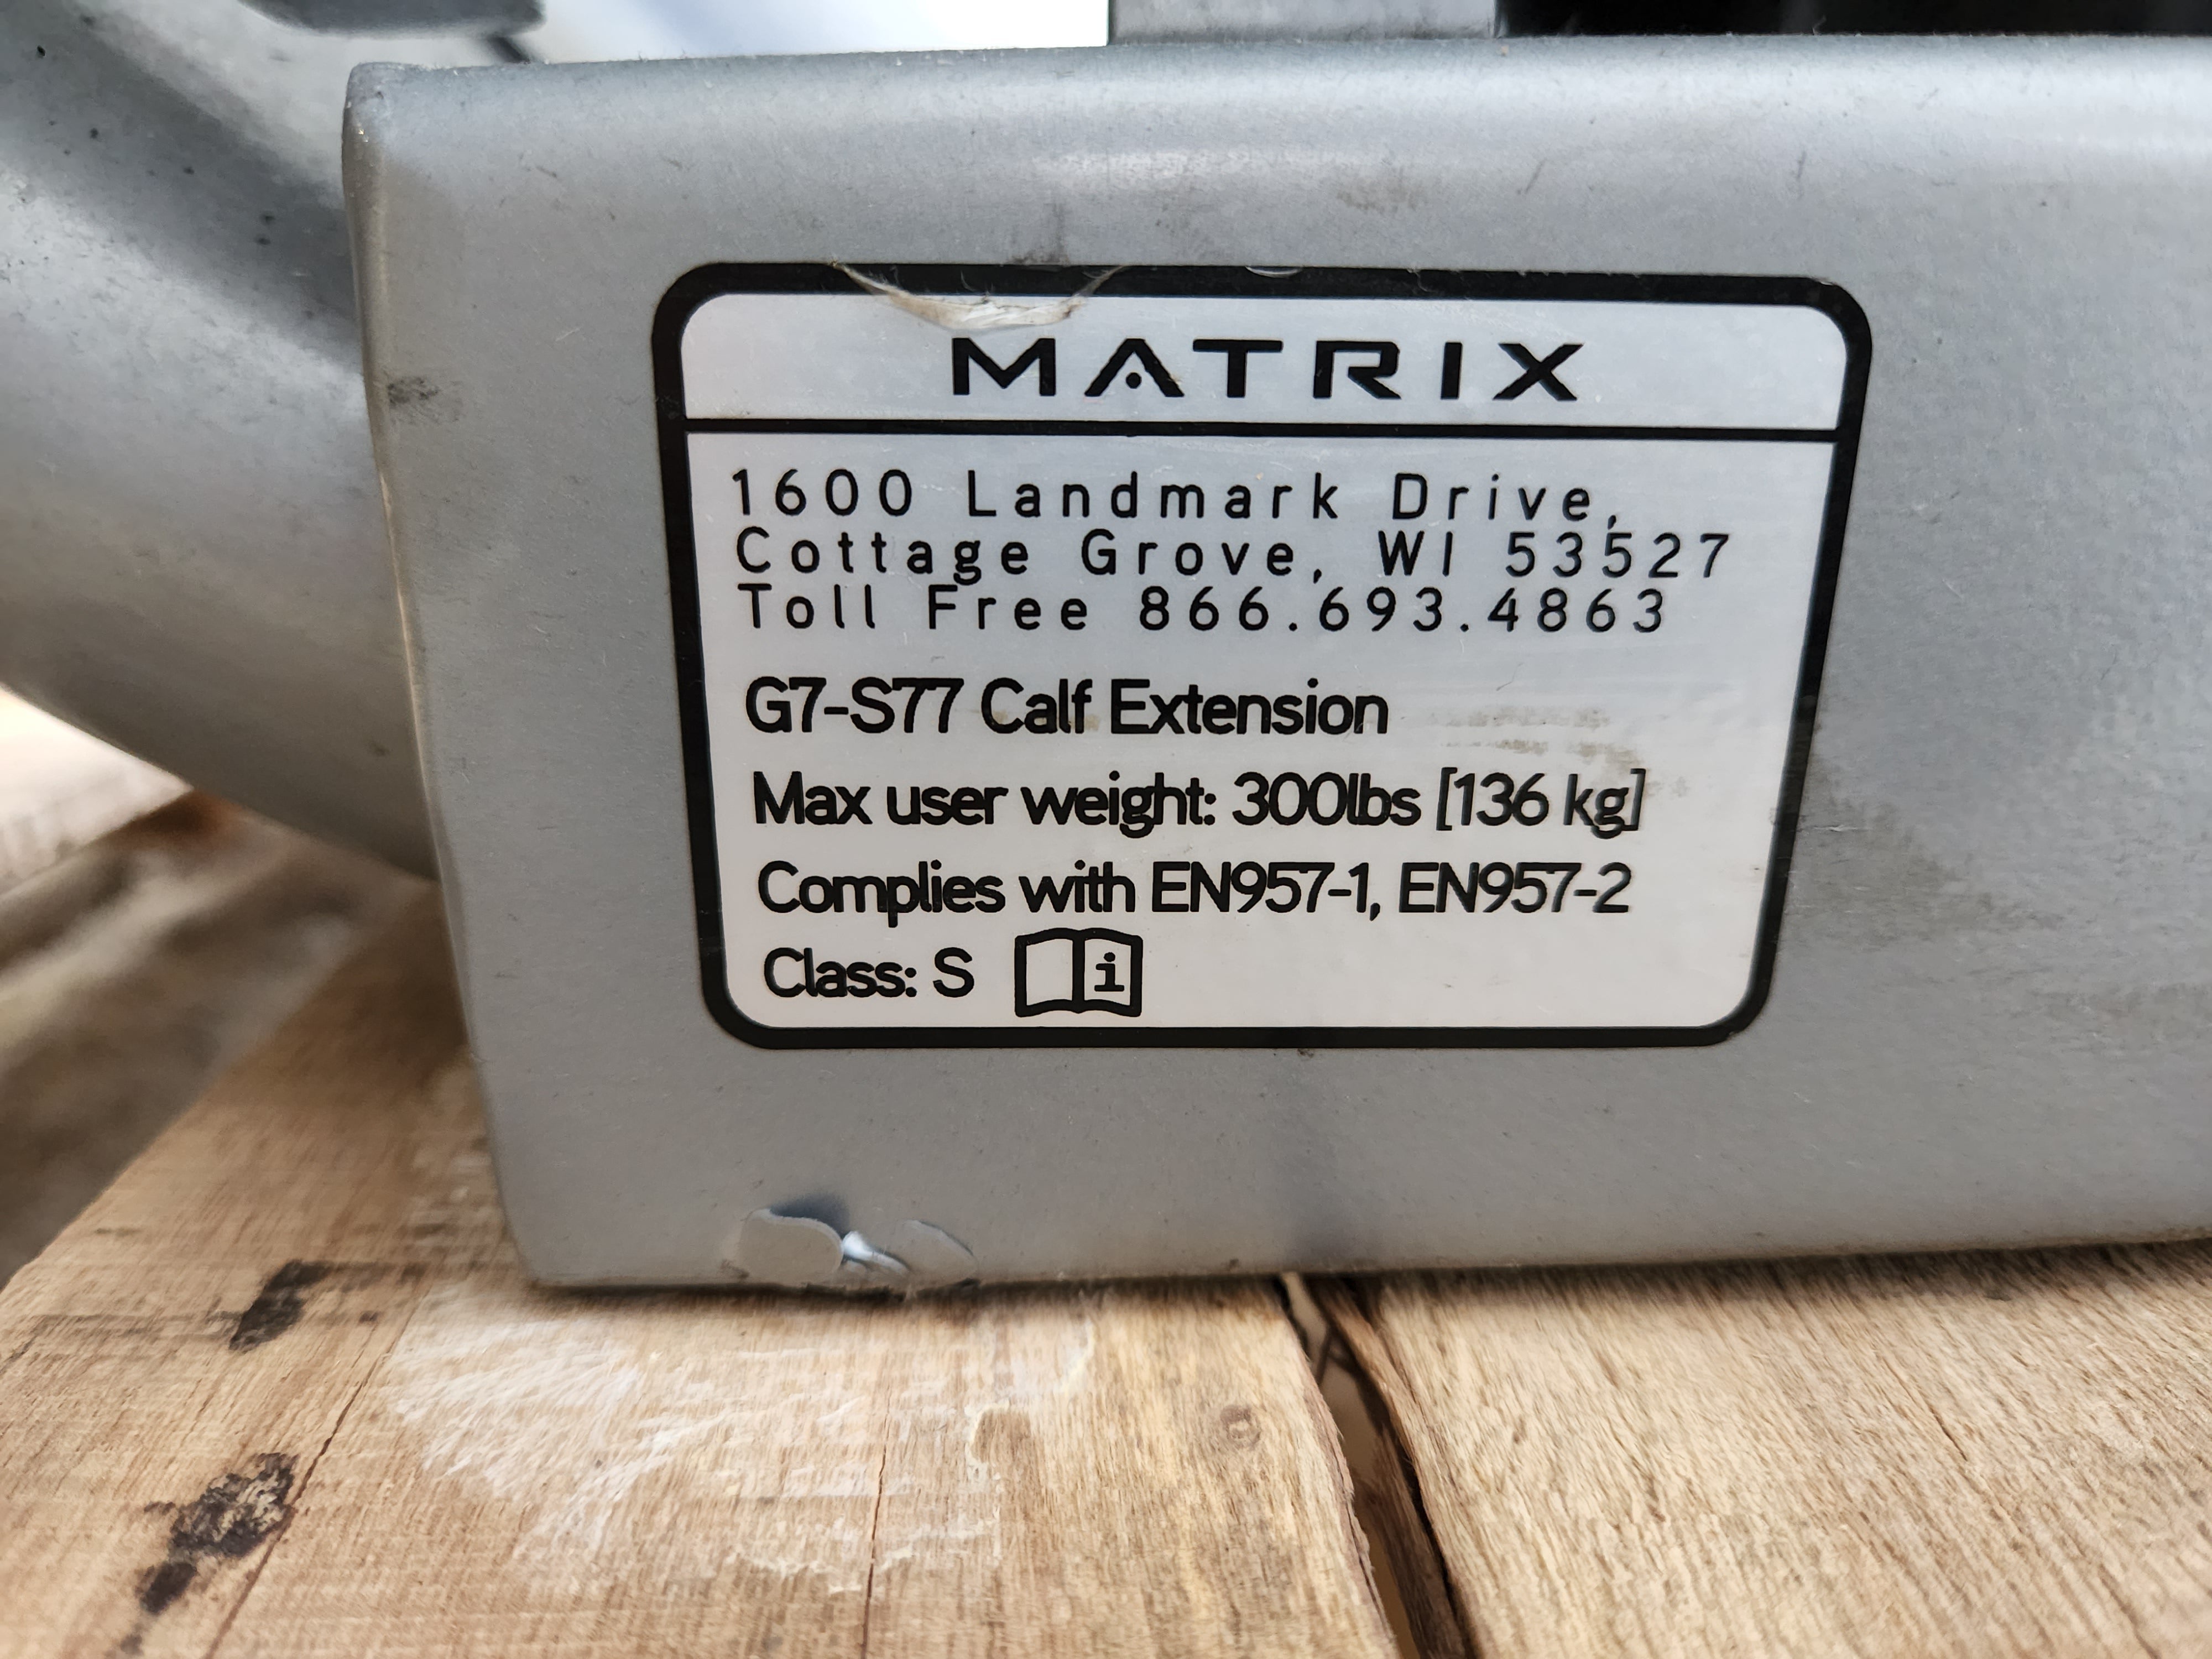 Matrix G7-S77 Calf Extension Machine